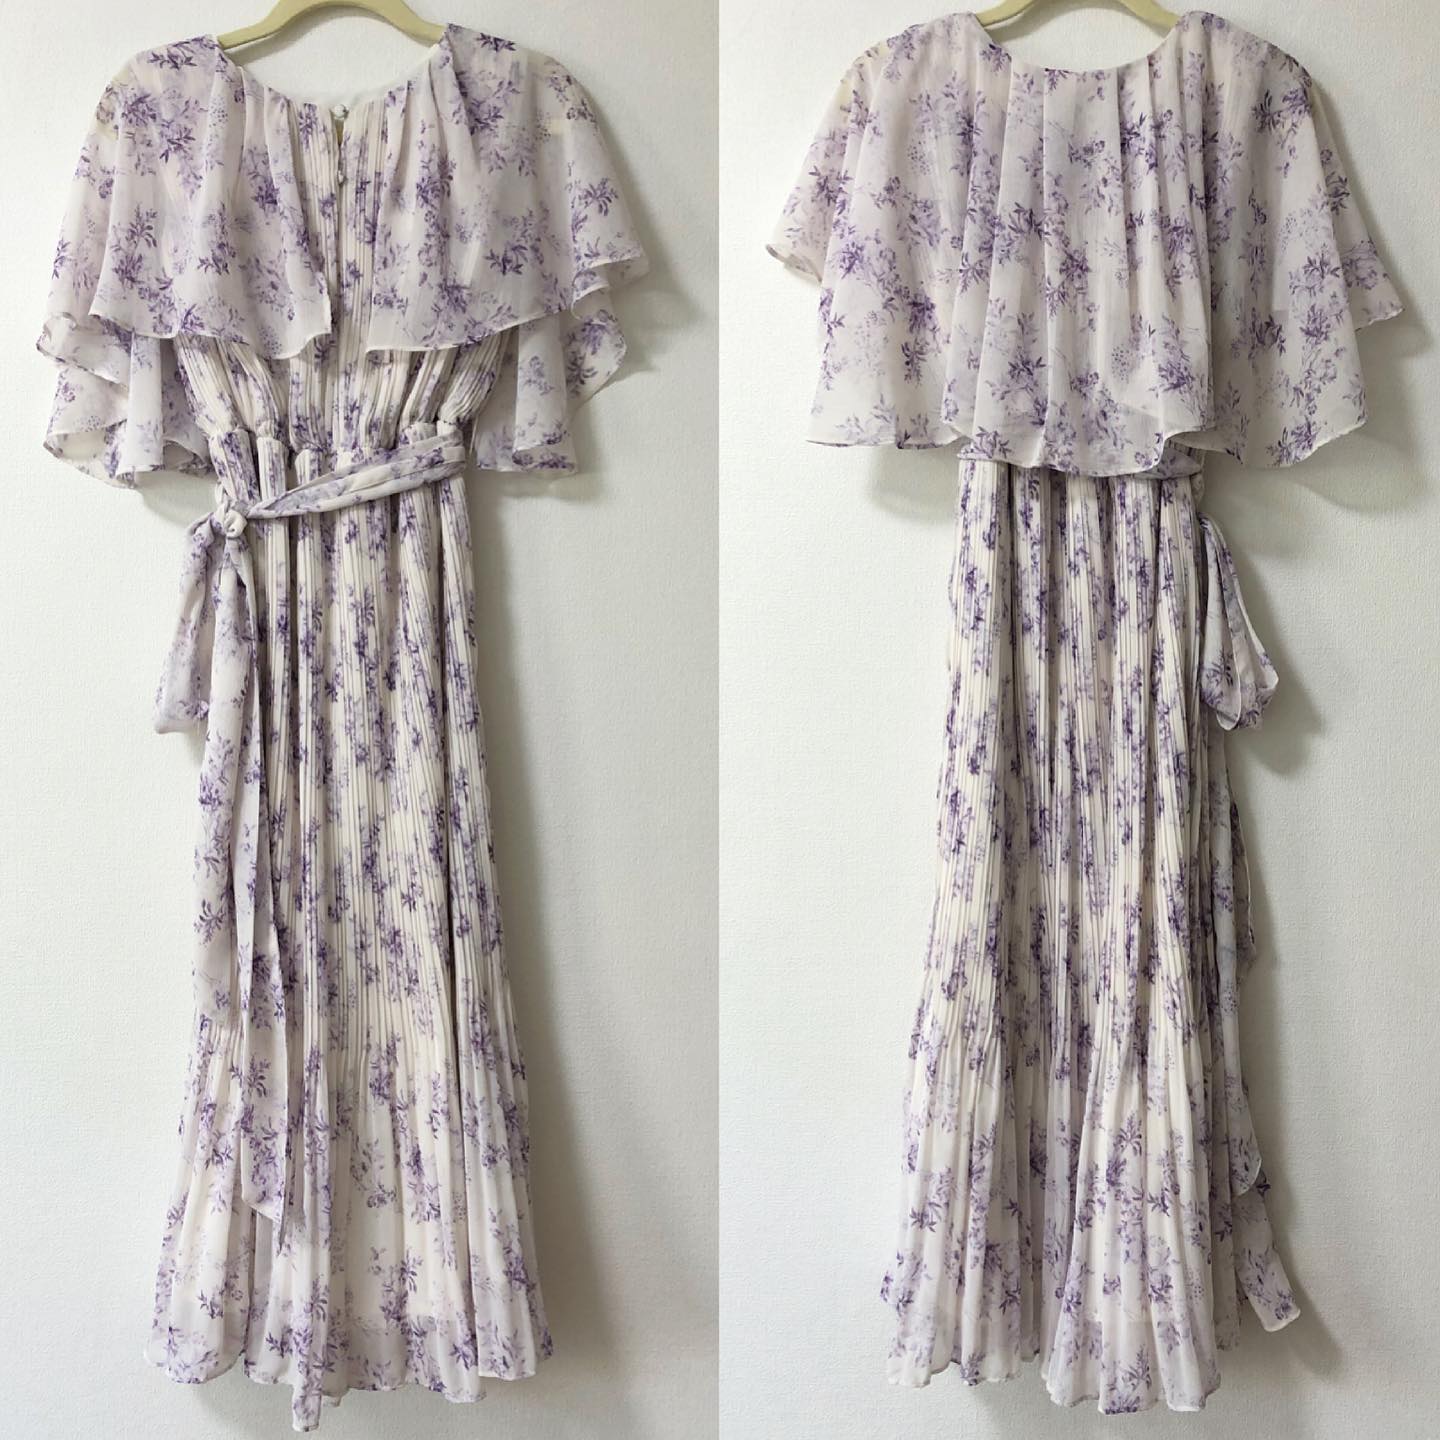 Fubail / Botanical Beauty Dress